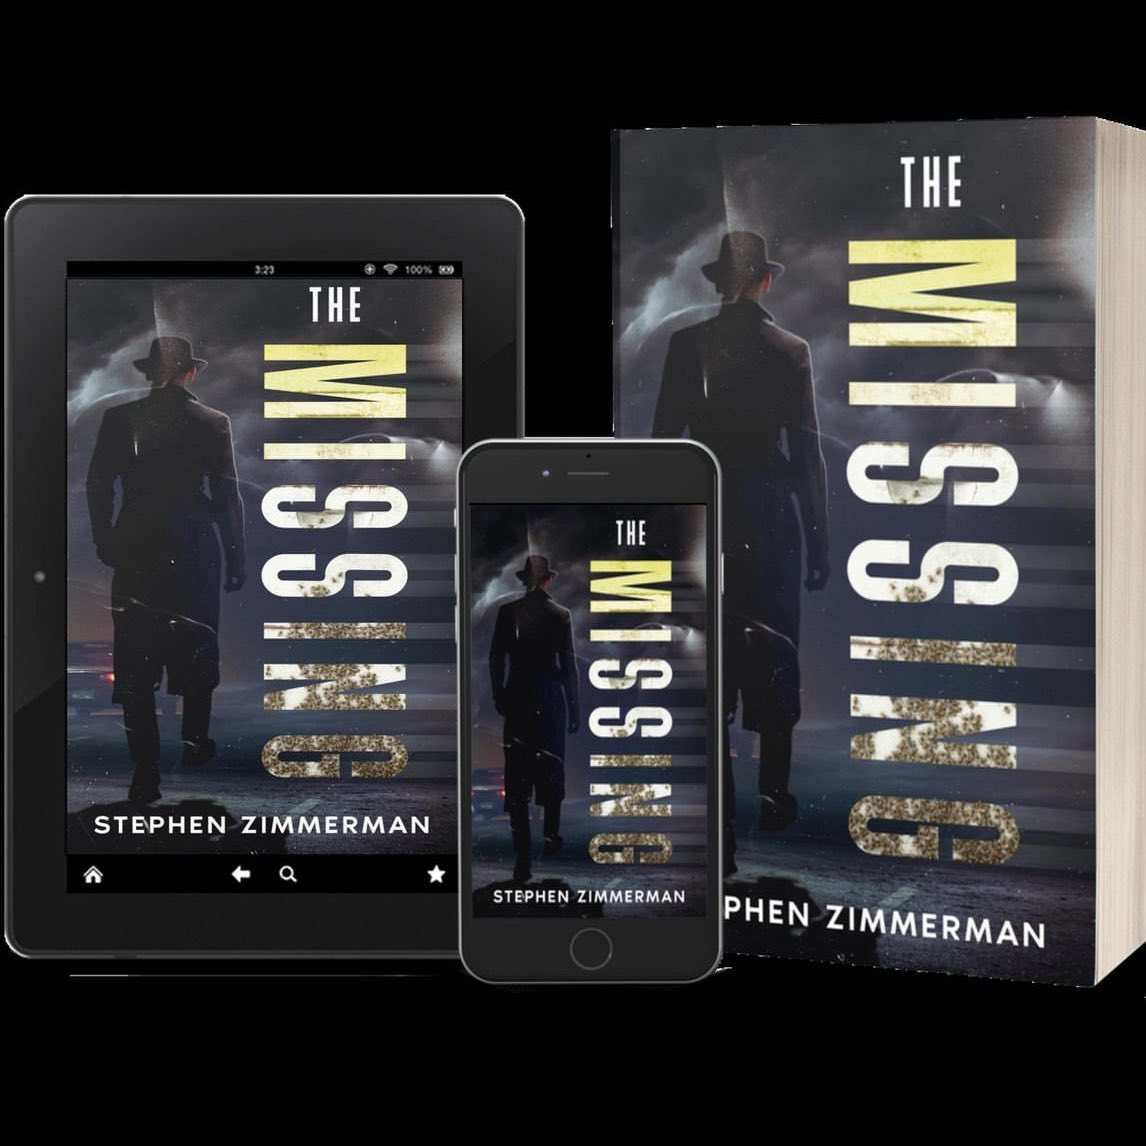 The Missing by Stephen Zimmerman available now! 
#mysteryfiction #thrillerbooks #mysterythrillerbooks #TheMissing #crimefictionauthor #readingaddict
amazon.com/Missing-Stephe…